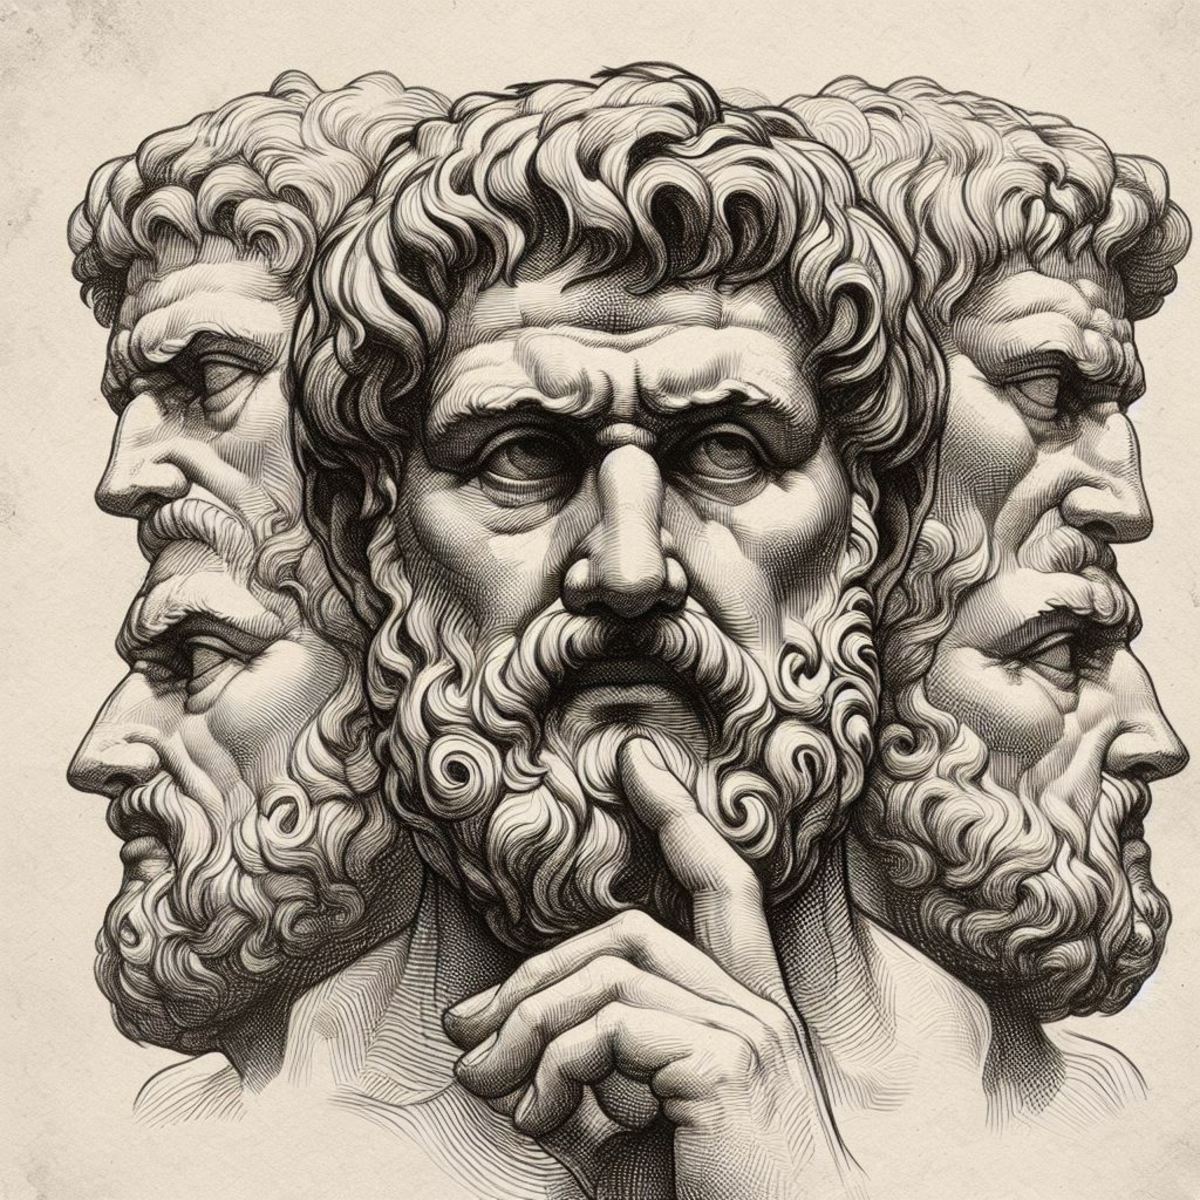 Roman Philosopher - Seneca